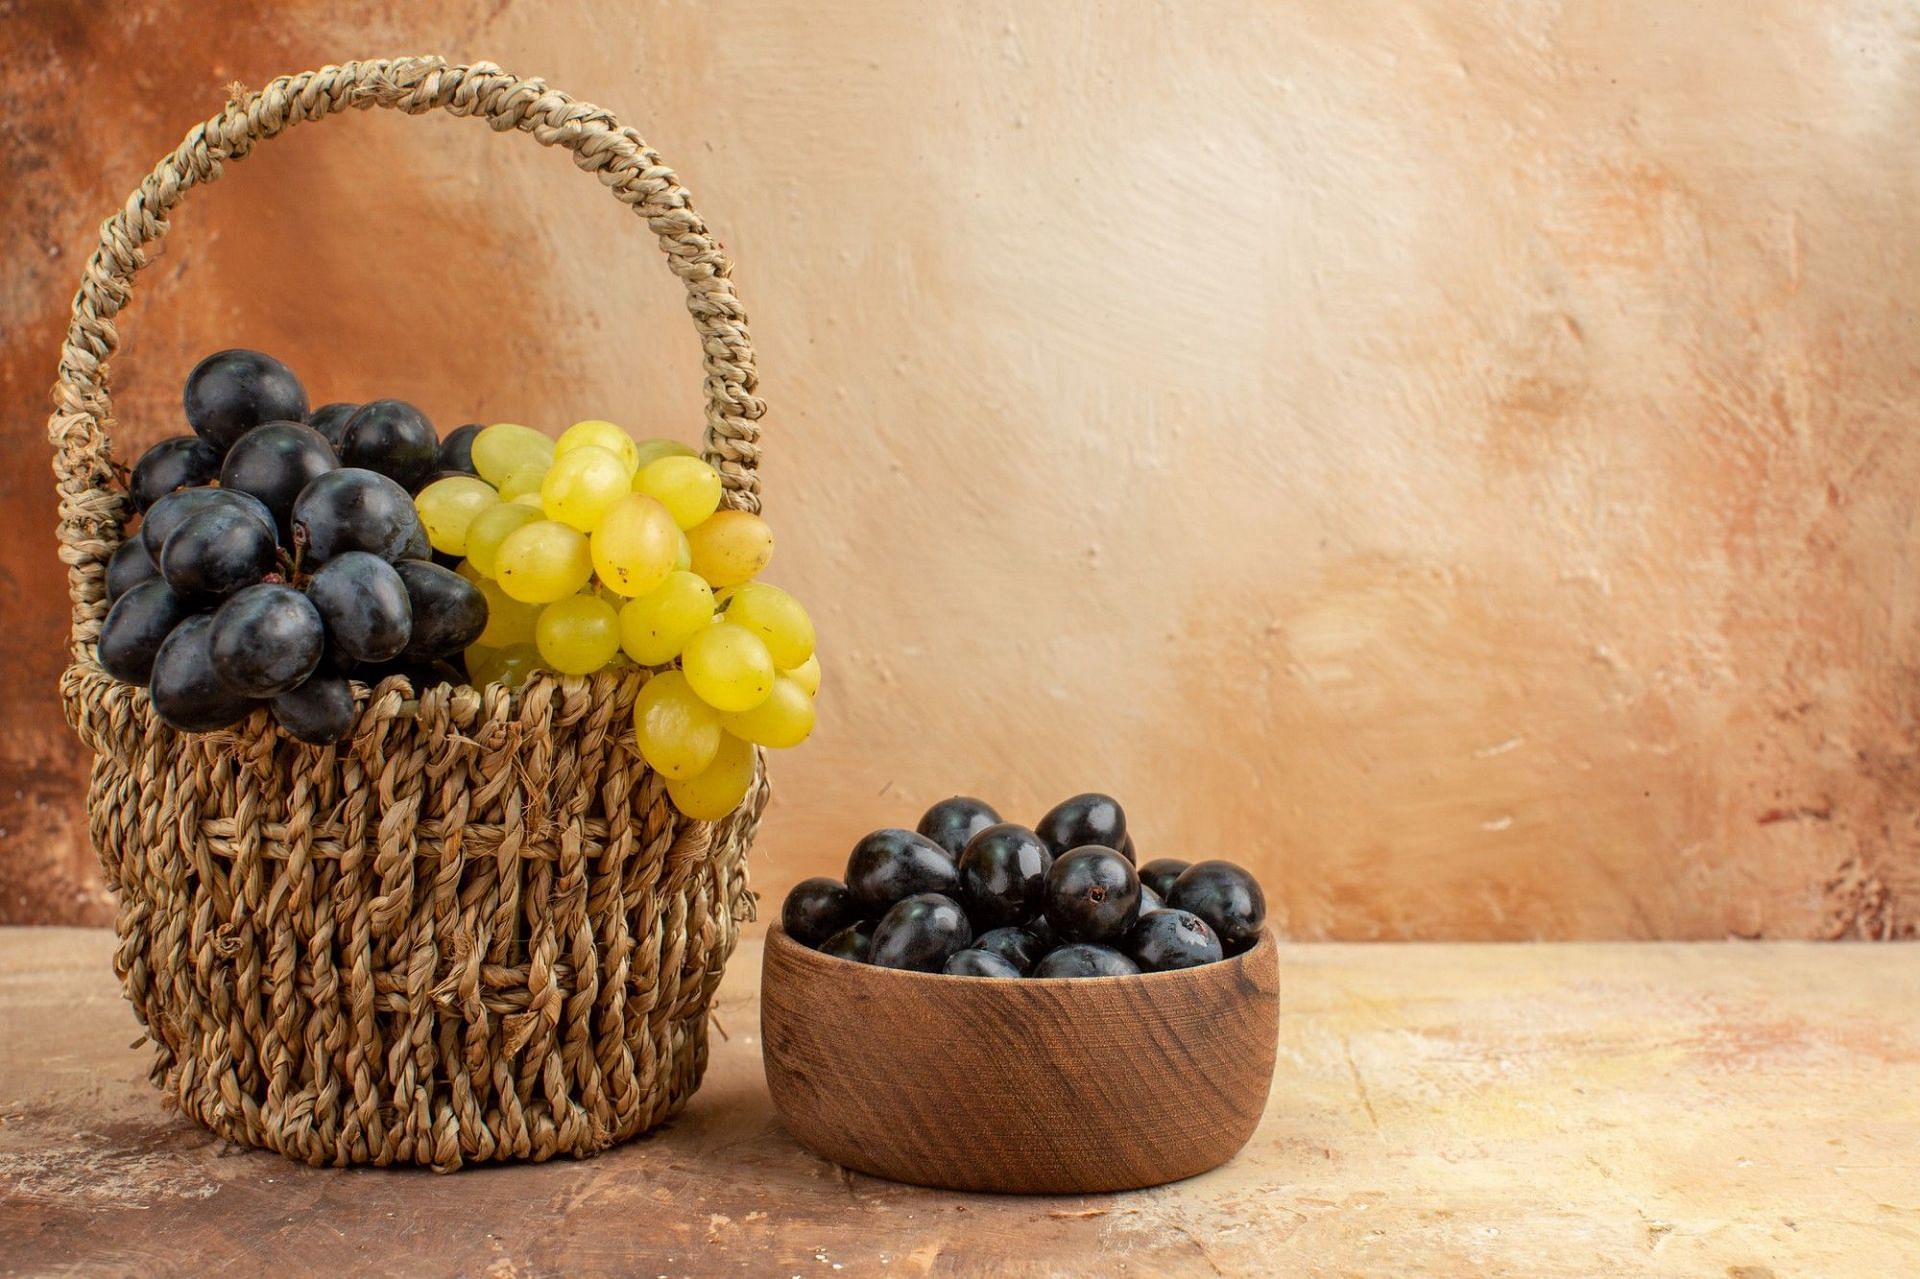 There are several health benefits of black grapes. (Image via Freepik)